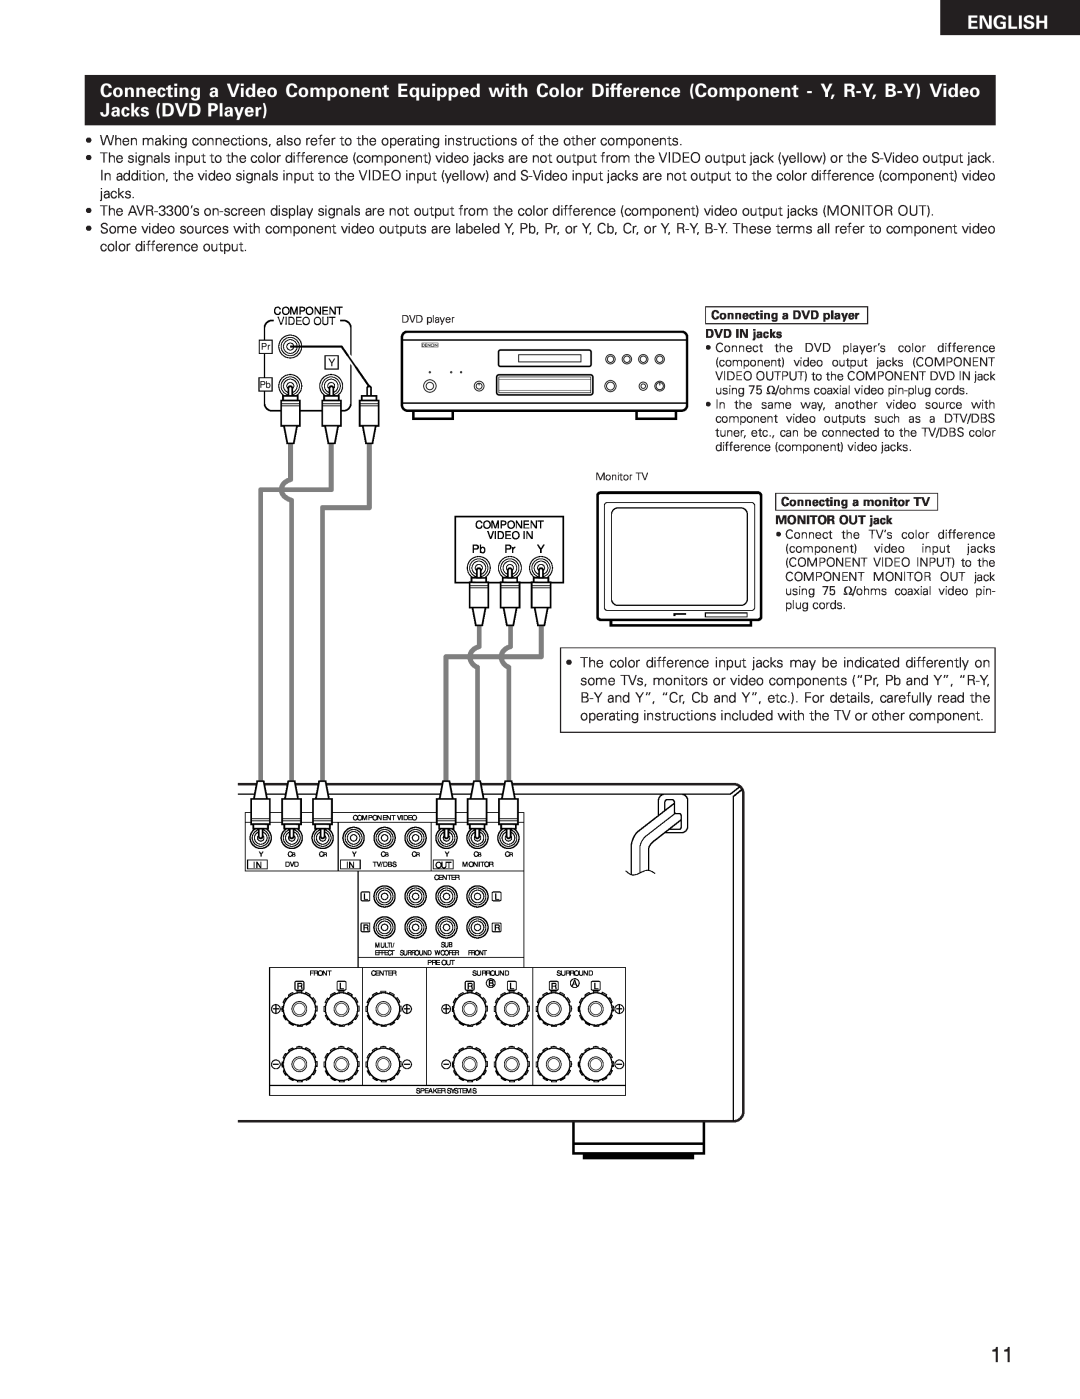 Denon AVR-3300 manual English, Connecting a DVD player DVD IN jacks, Connecting a monitor TV MONITOR OUT jack 